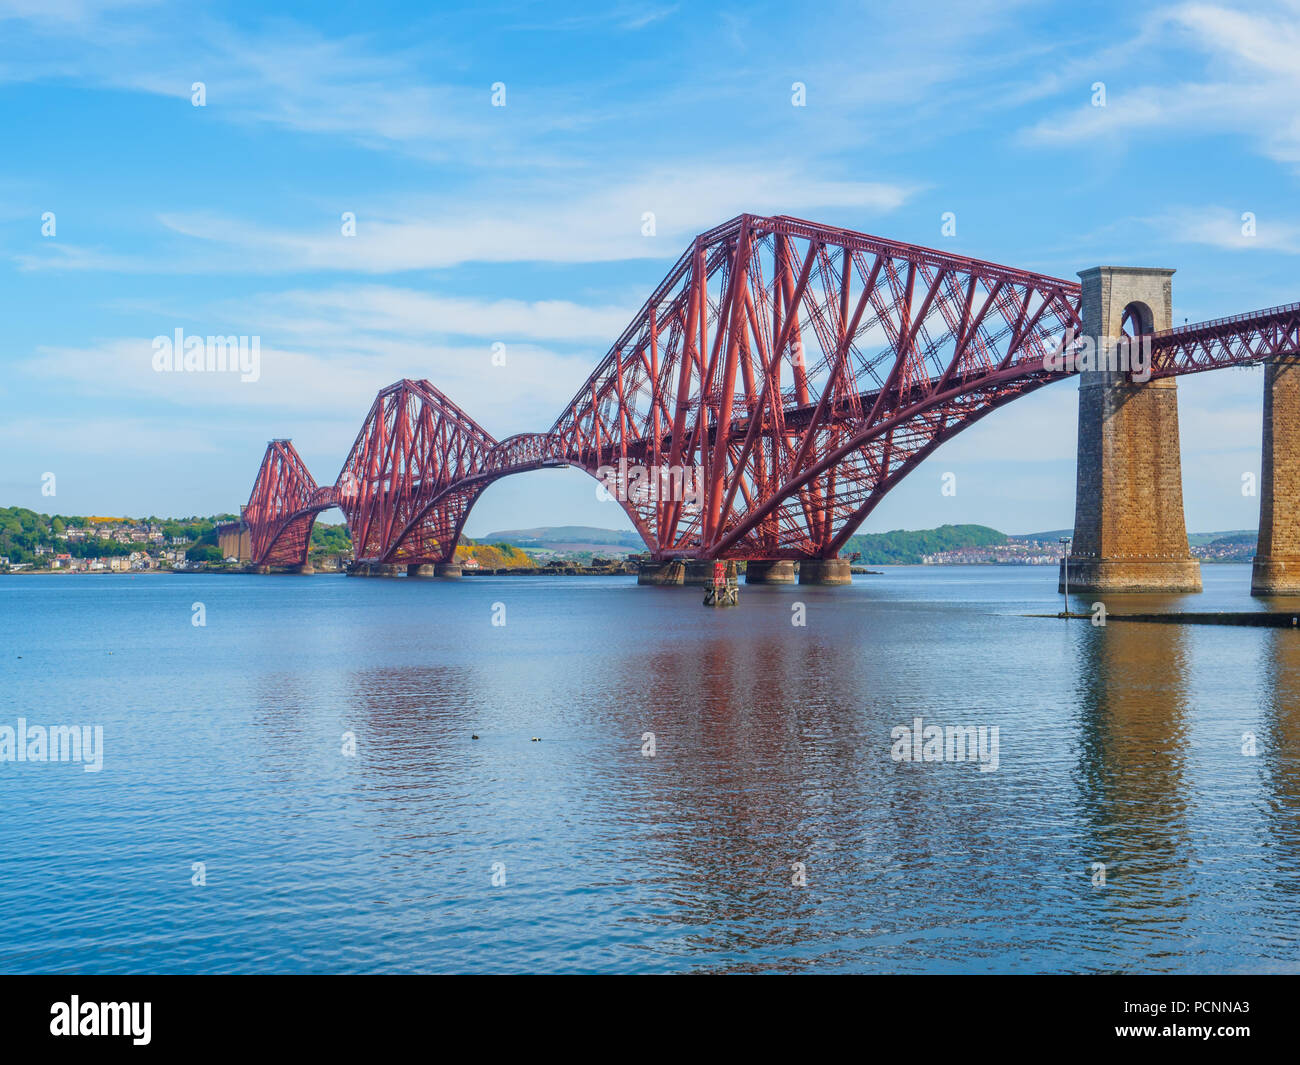 View of the Forth Bridge, a cantilever railway bridge across the Firth of Forth near Edinburgh, Scotland, UK. Stock Photo